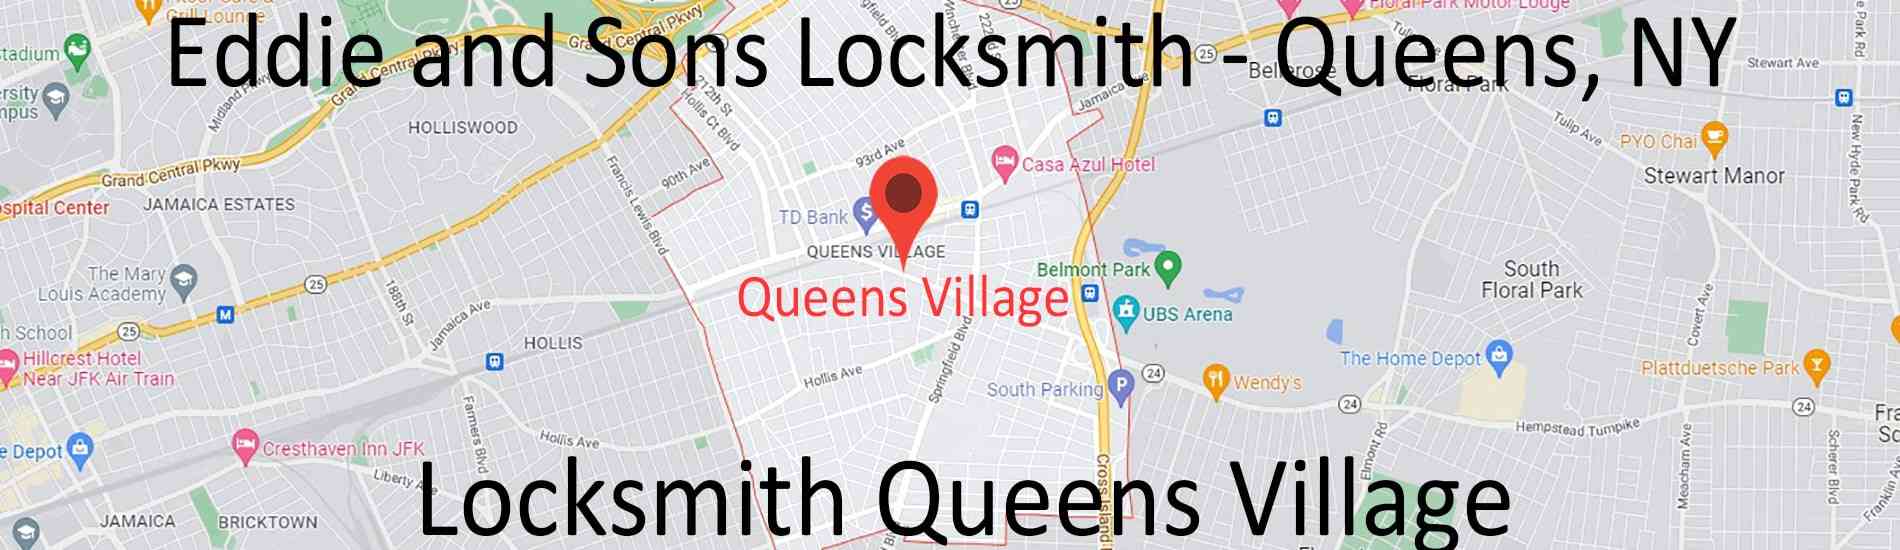 queens village - Eddie and Sons Locksmith – Queens, NY